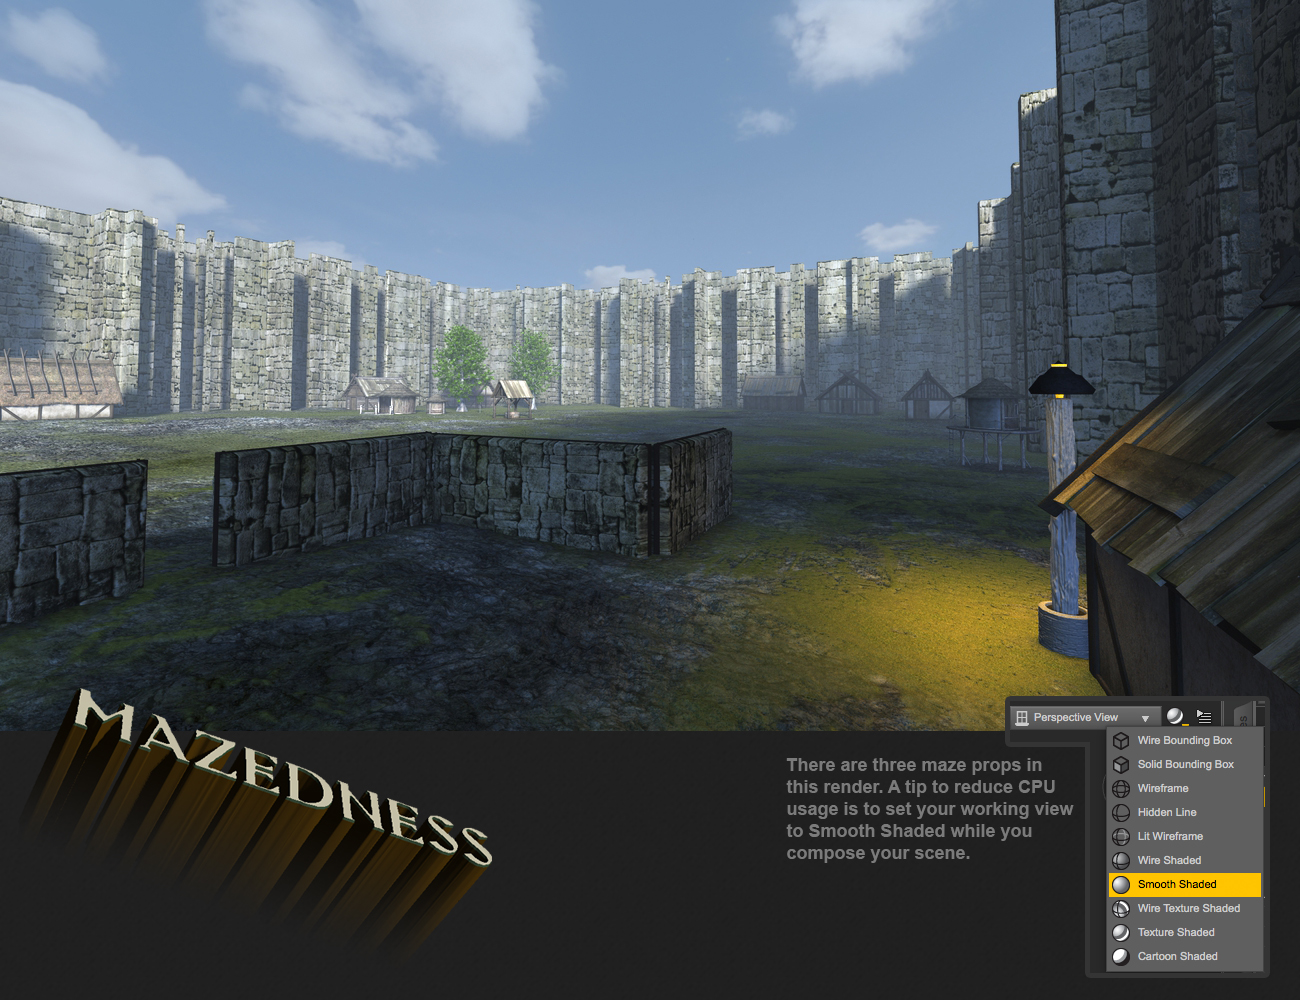 Mazedness for DAZ Studio by: Marshian, 3D Models by Daz 3D